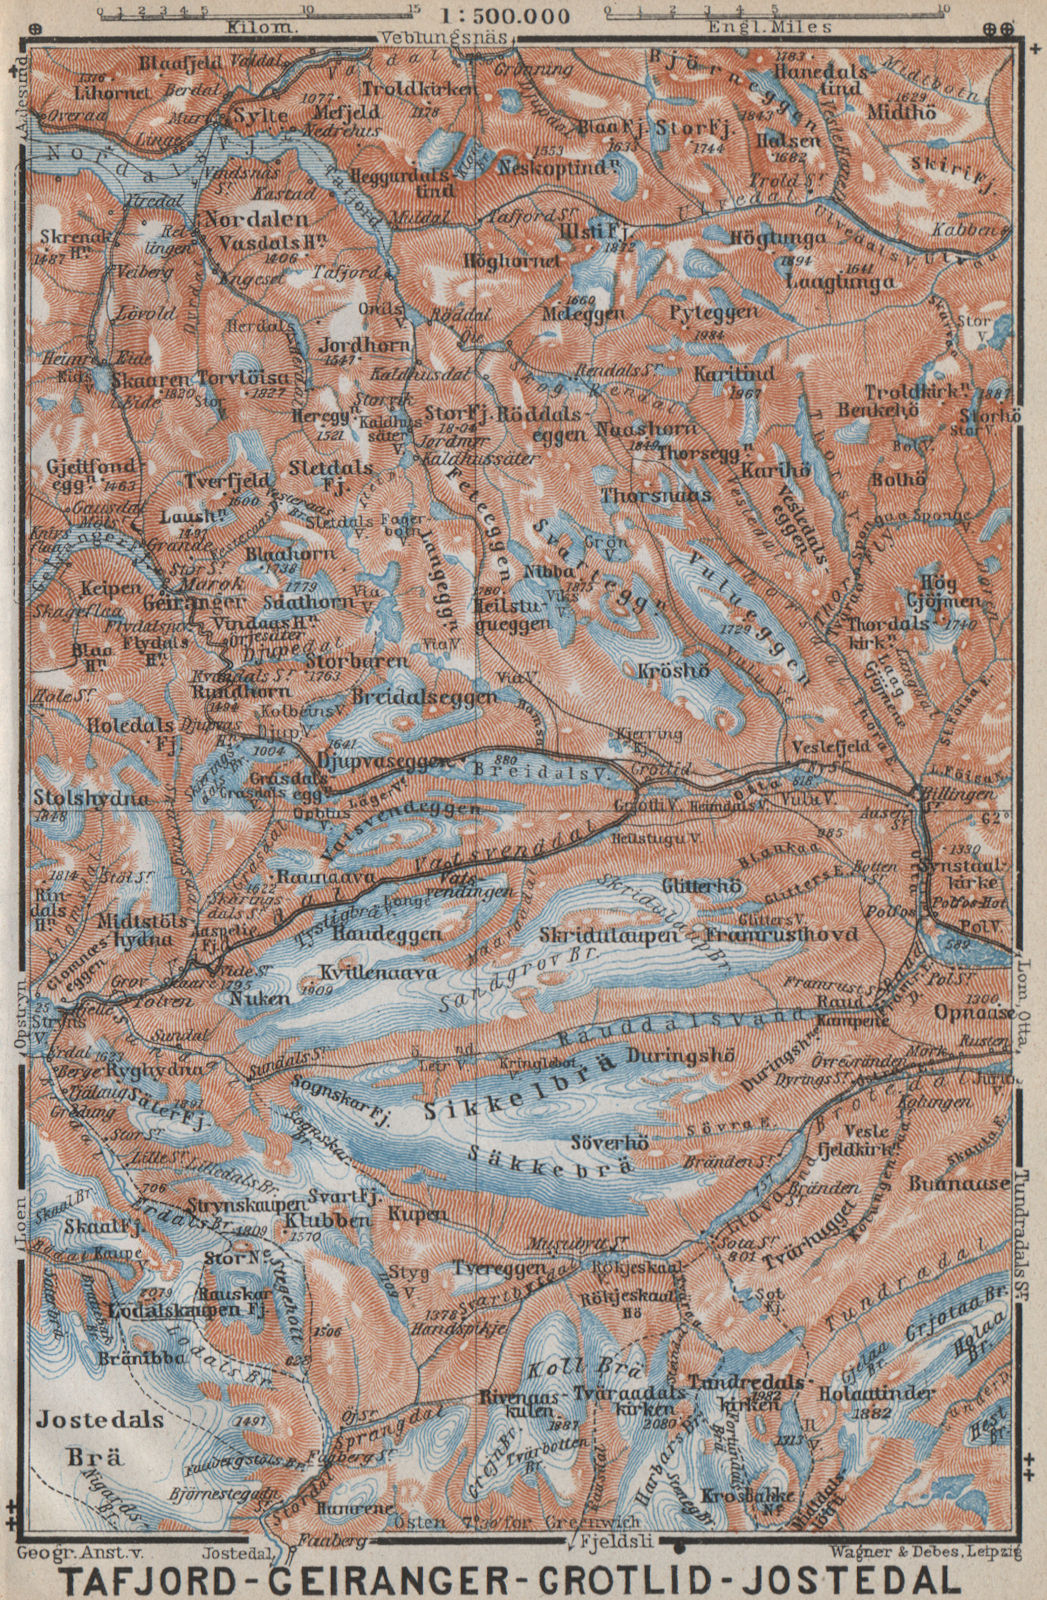 Associate Product Geiranger Polfos Tafjord Jostedal Grotli Topo-map. Norway kart 1912 old